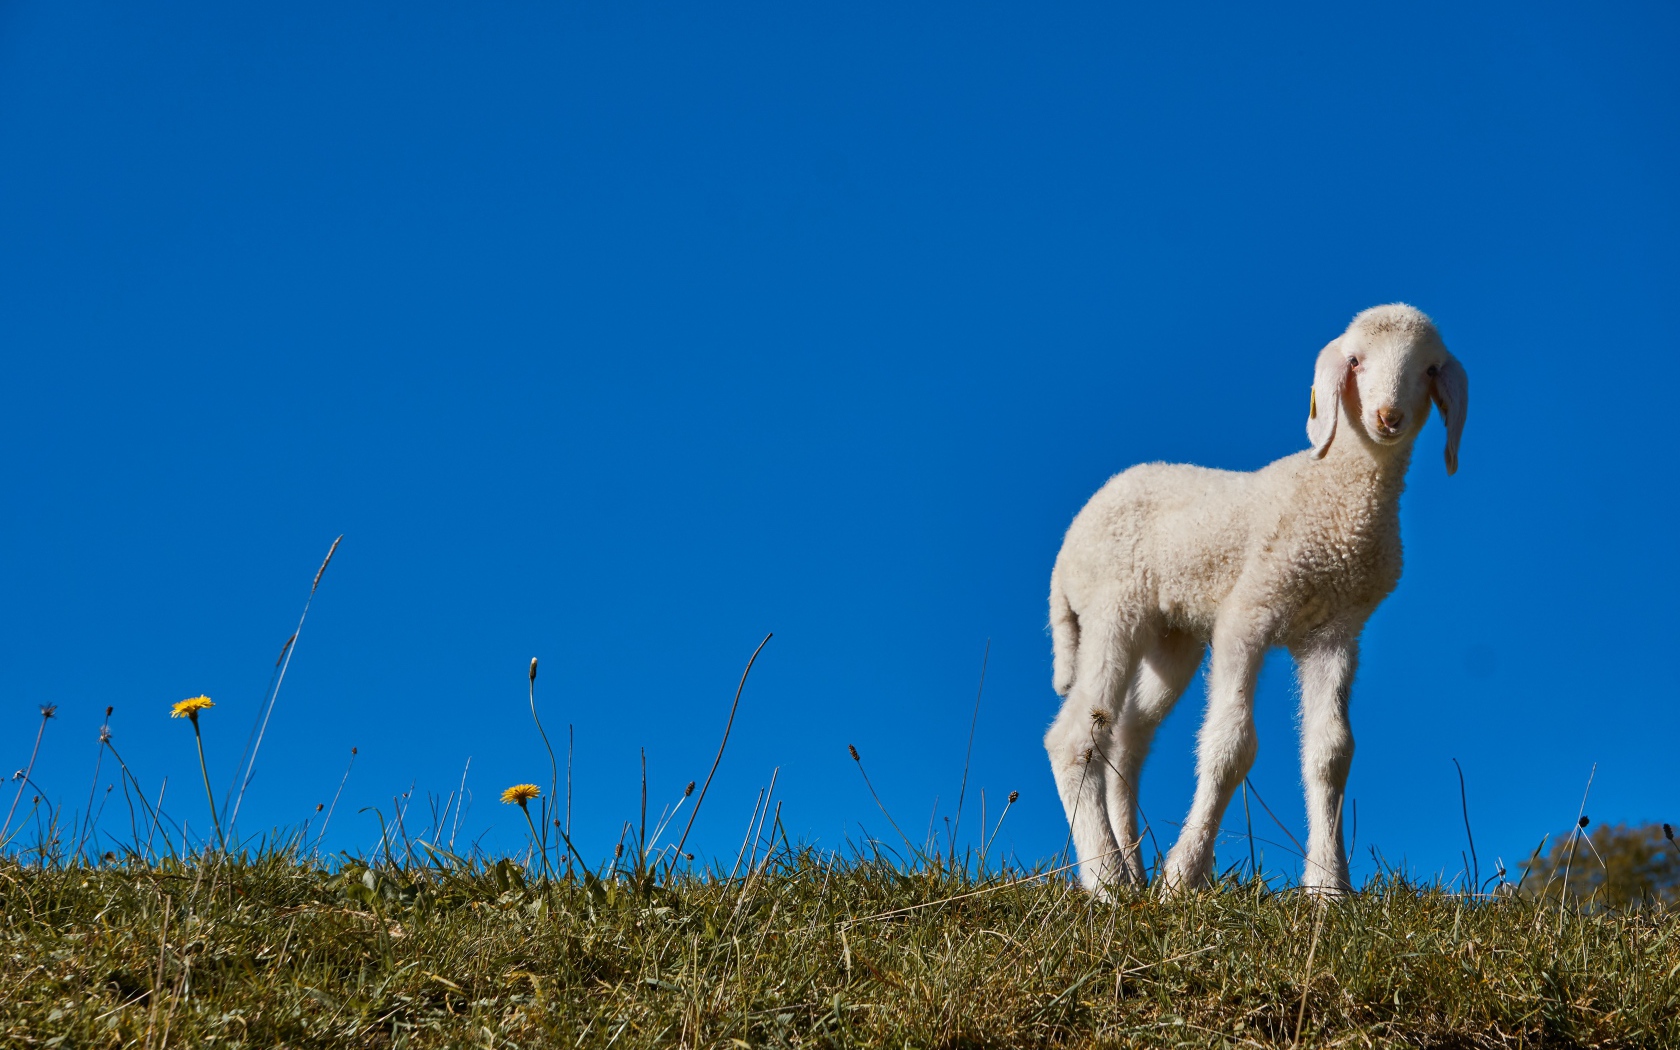 Little white lamb on blue sky background